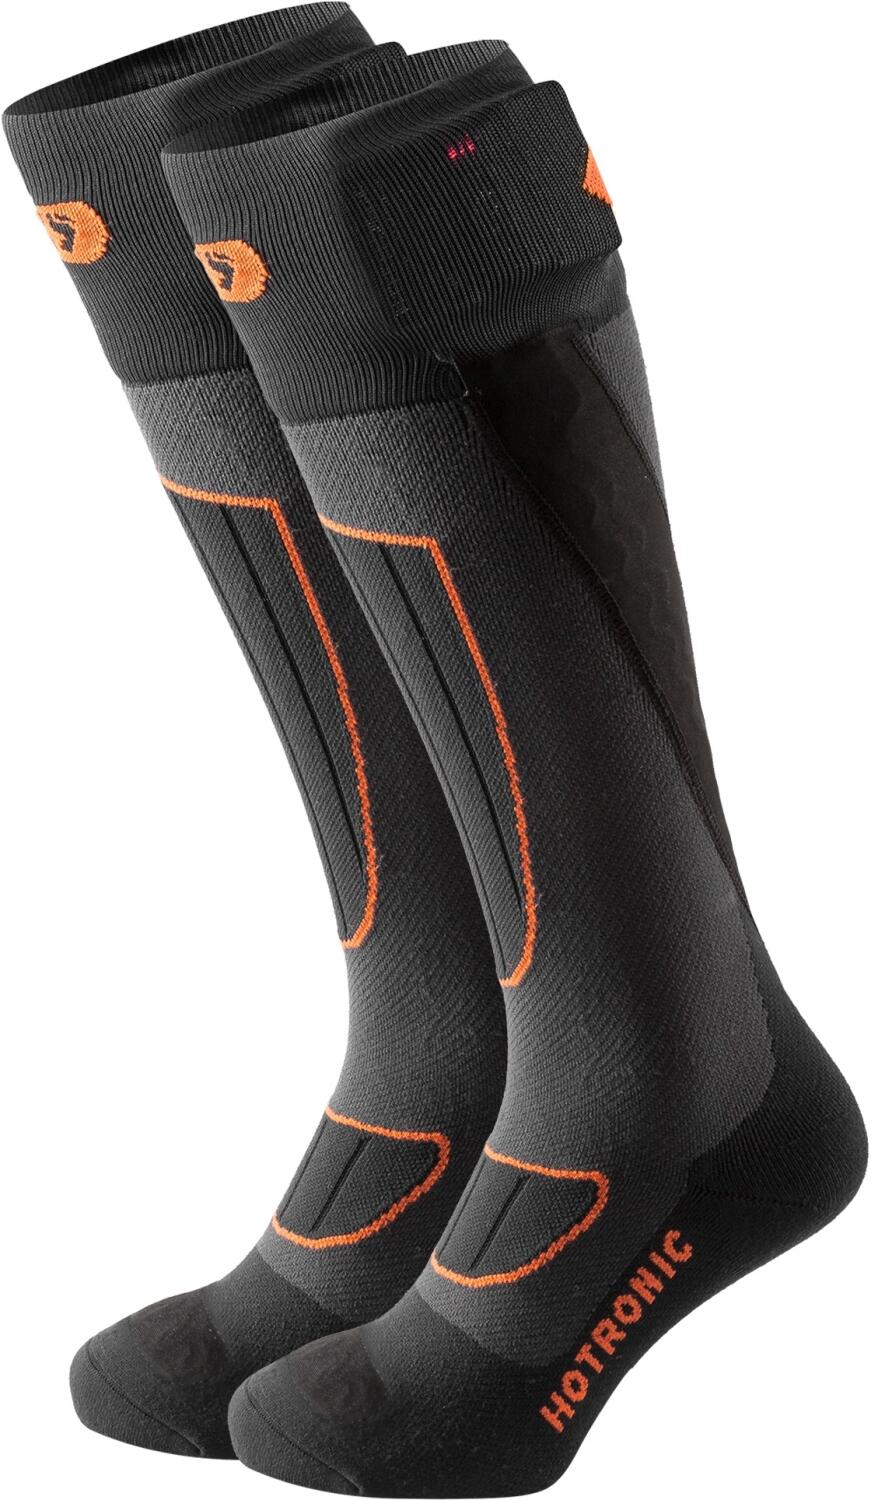 Hotronic Heat Socks Surround Comfort (35.0 - 38.0, anthrazit/orange, 1 Paar) von Hotronic